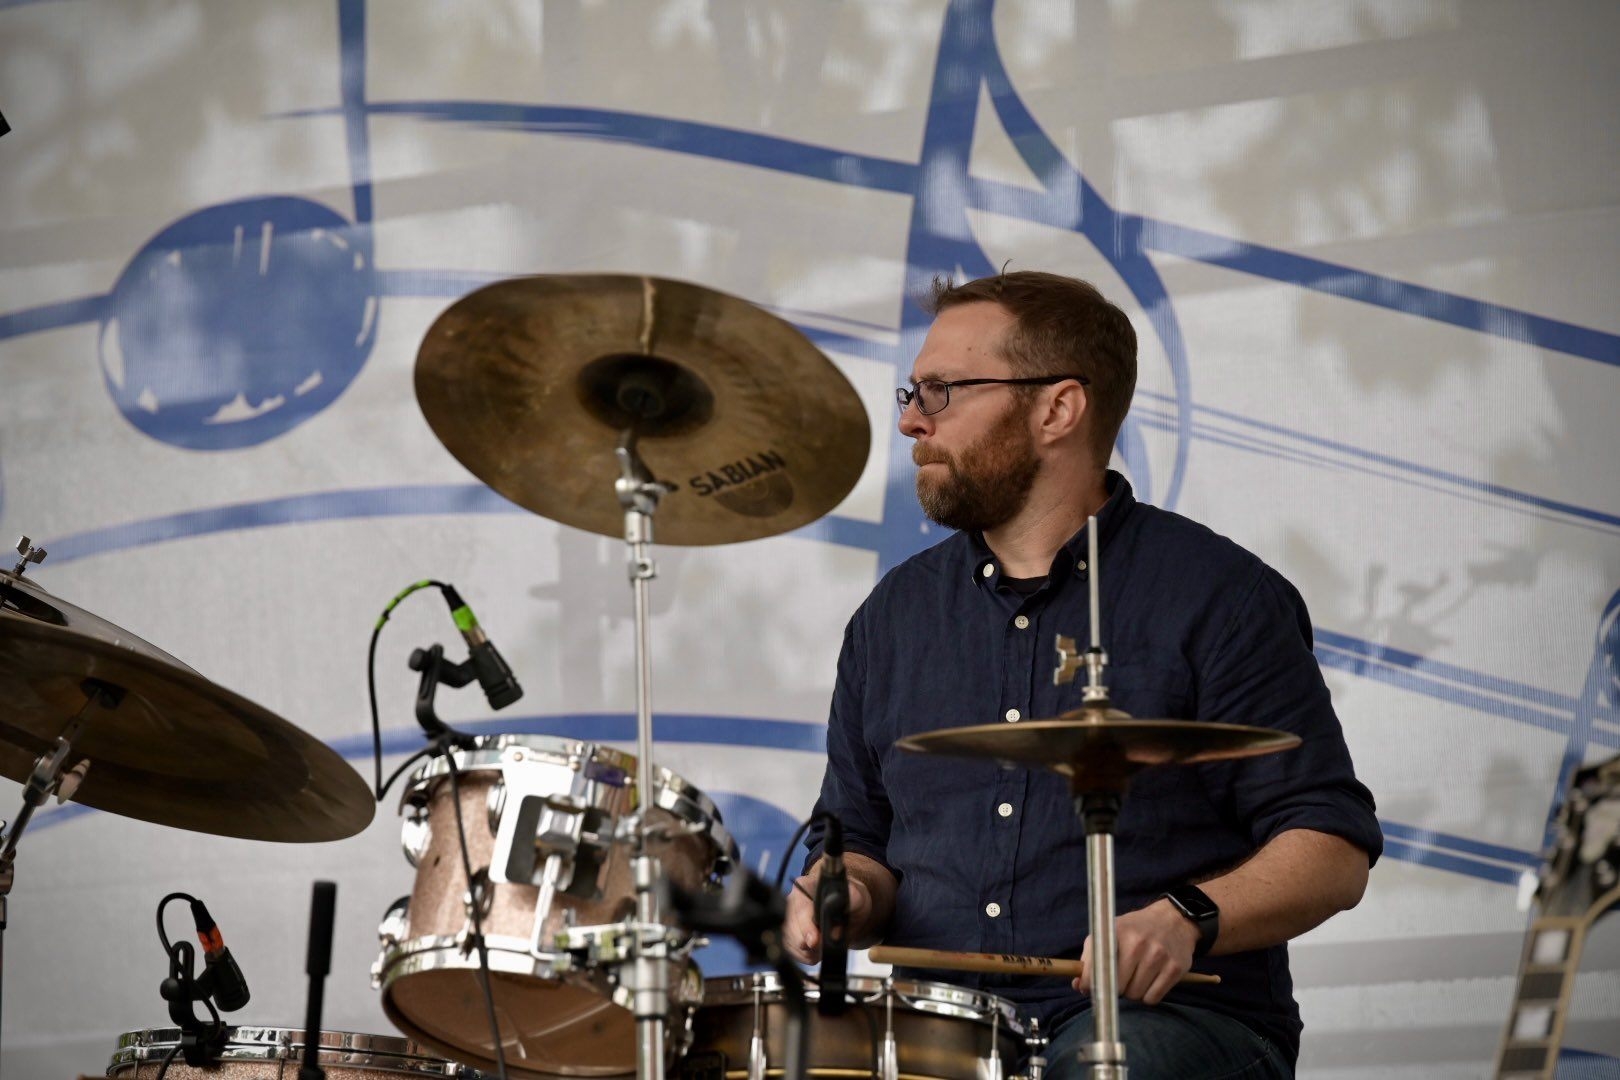 Drum Teacher Brad Bourgeois